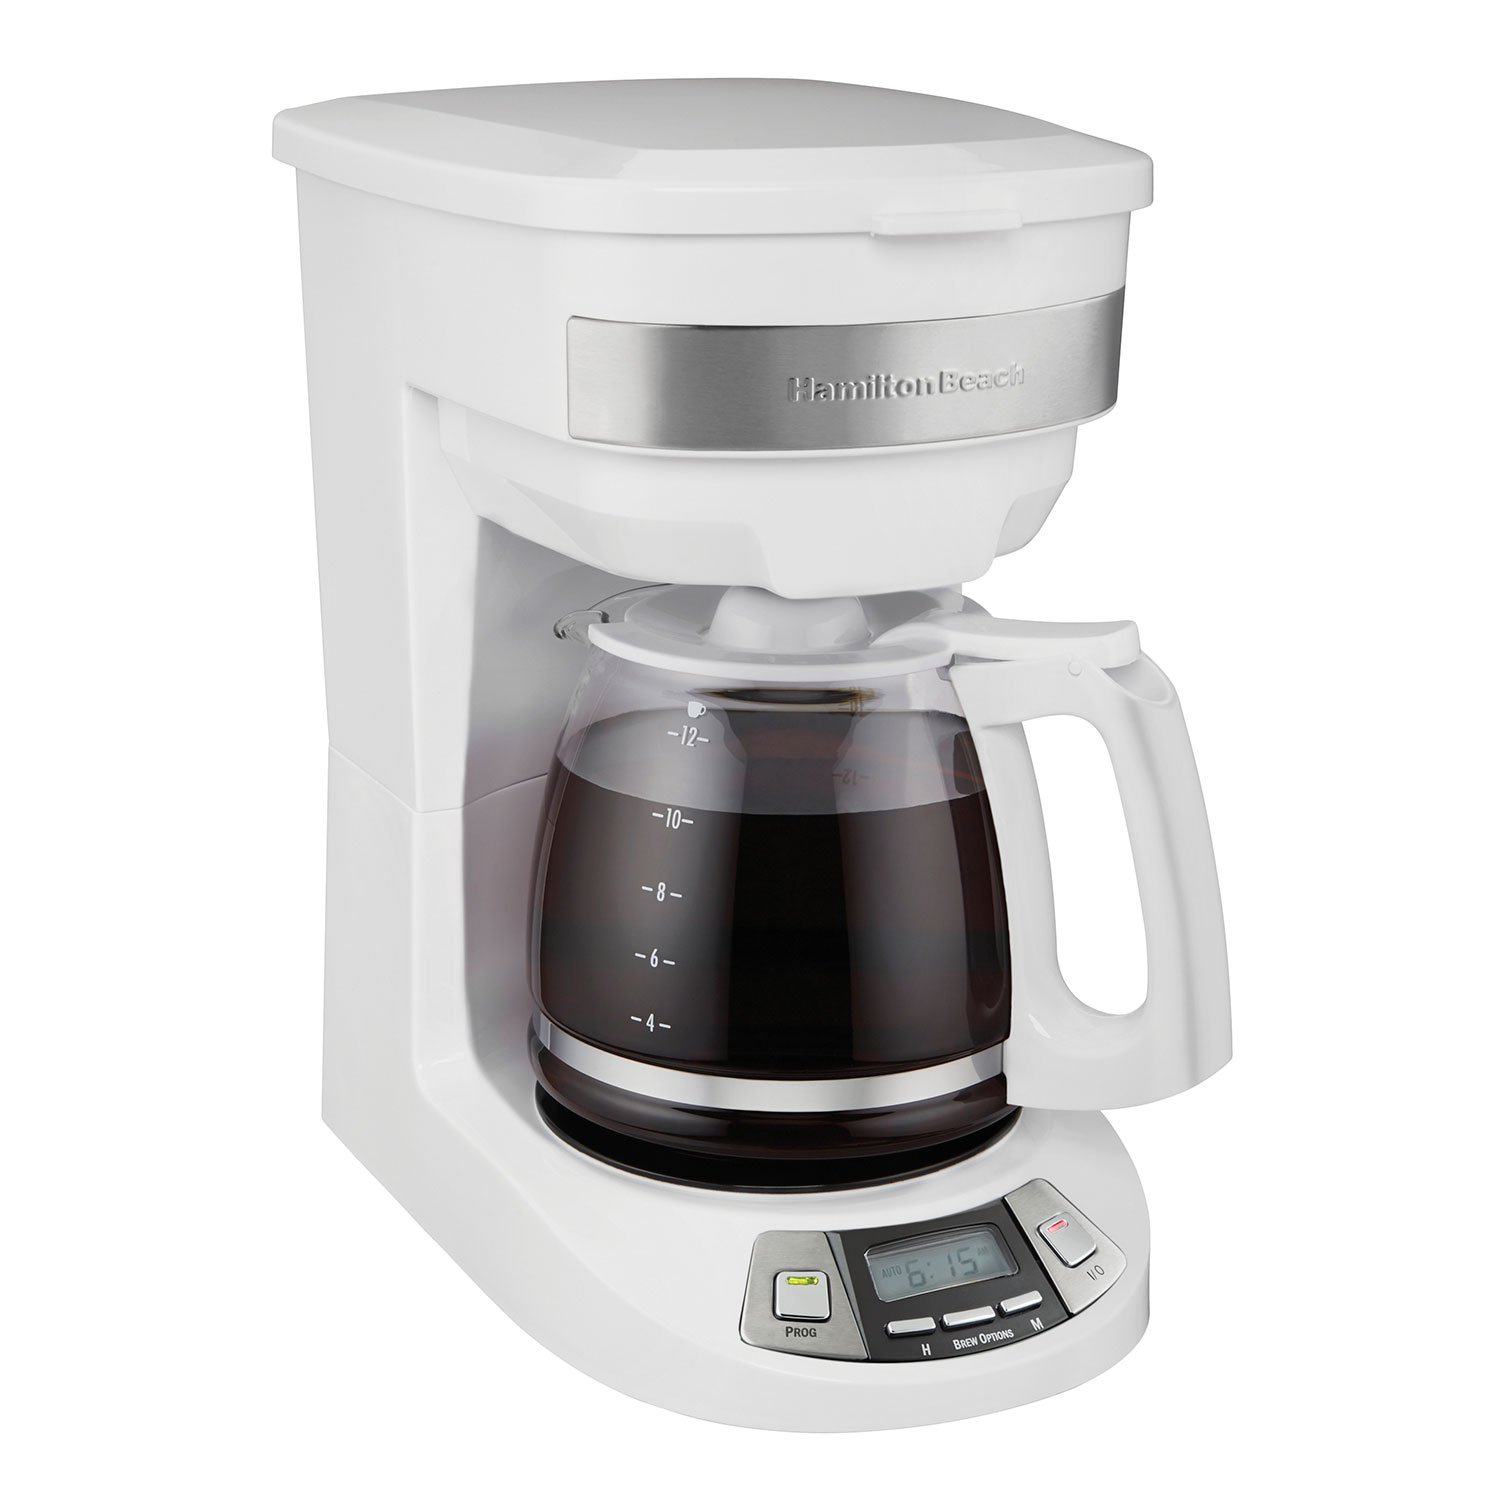 Hamilton Beach 12 Cup Programmable Coffee Maker, White - 46294